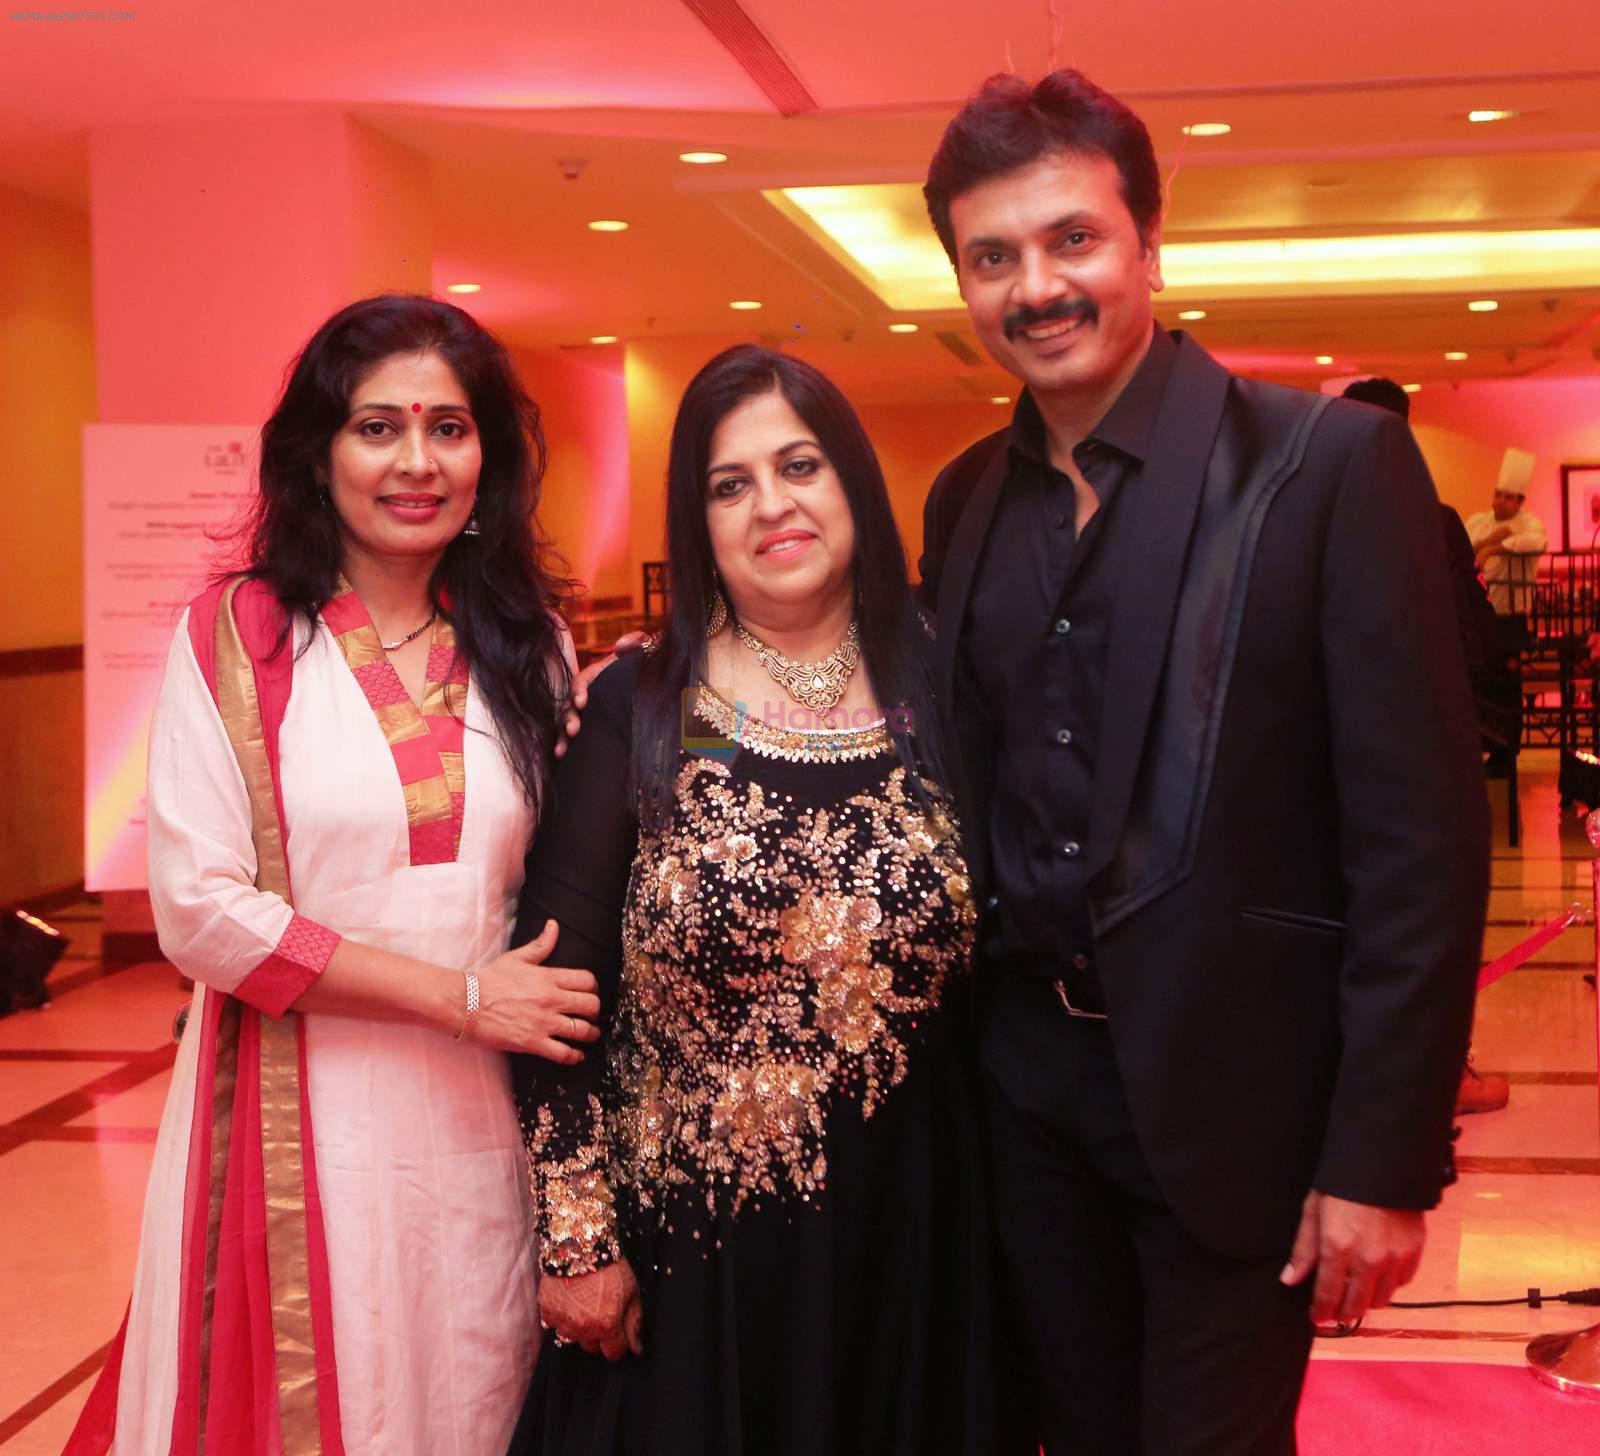 Milind Gawli Marathi star with Anita Israni at Luv Isranis wedding wrap up party